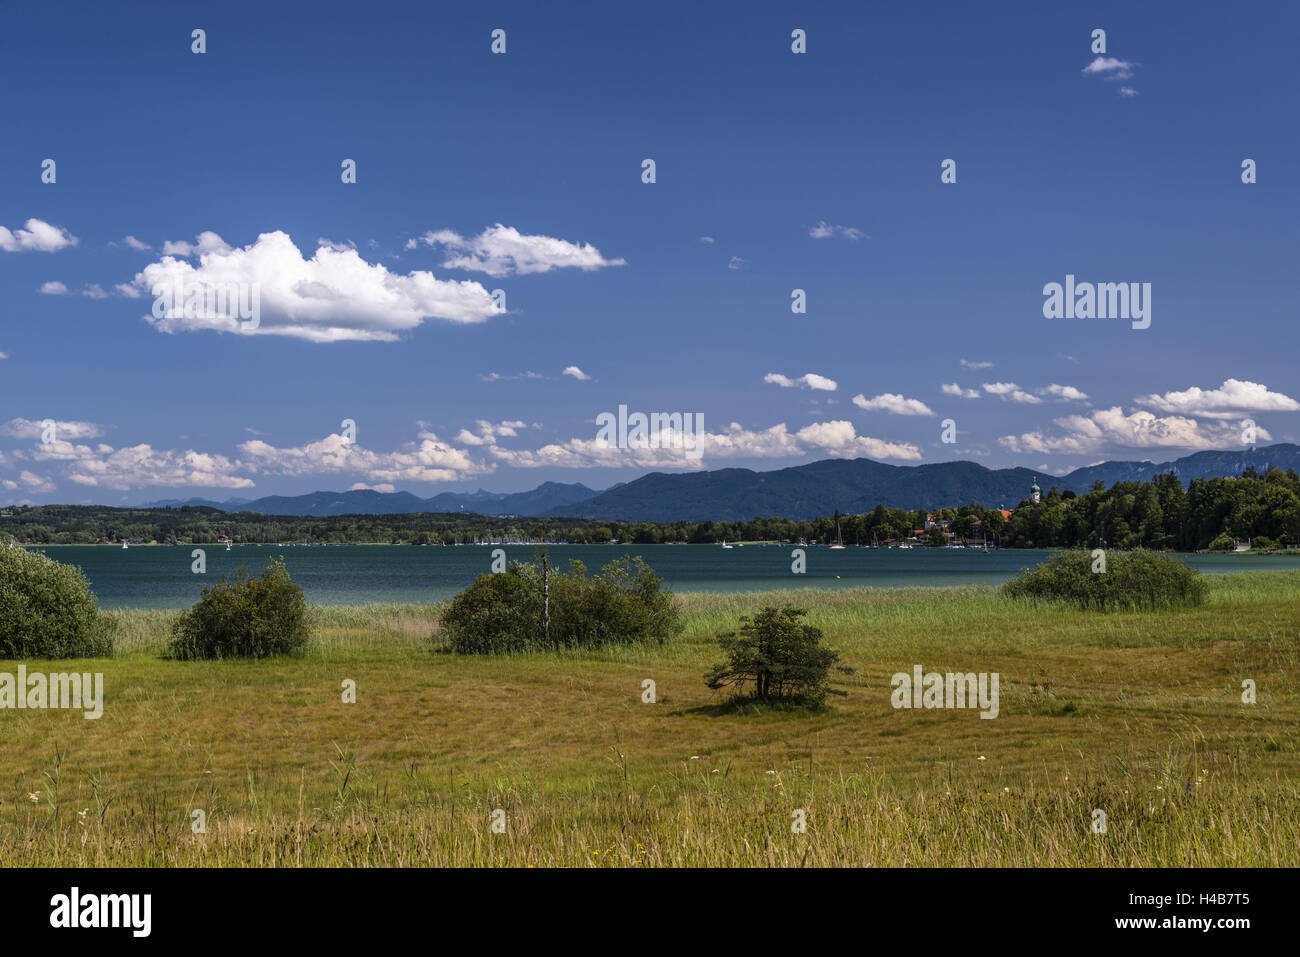 Germany, Bavaria, Upper Bavaria, 'Fünf Seen Land' (region), Lake Starnberg, Seeshaupt (village), view from Seeseiten to Seeshaupt (village) against pre-alpines, Stock Photo